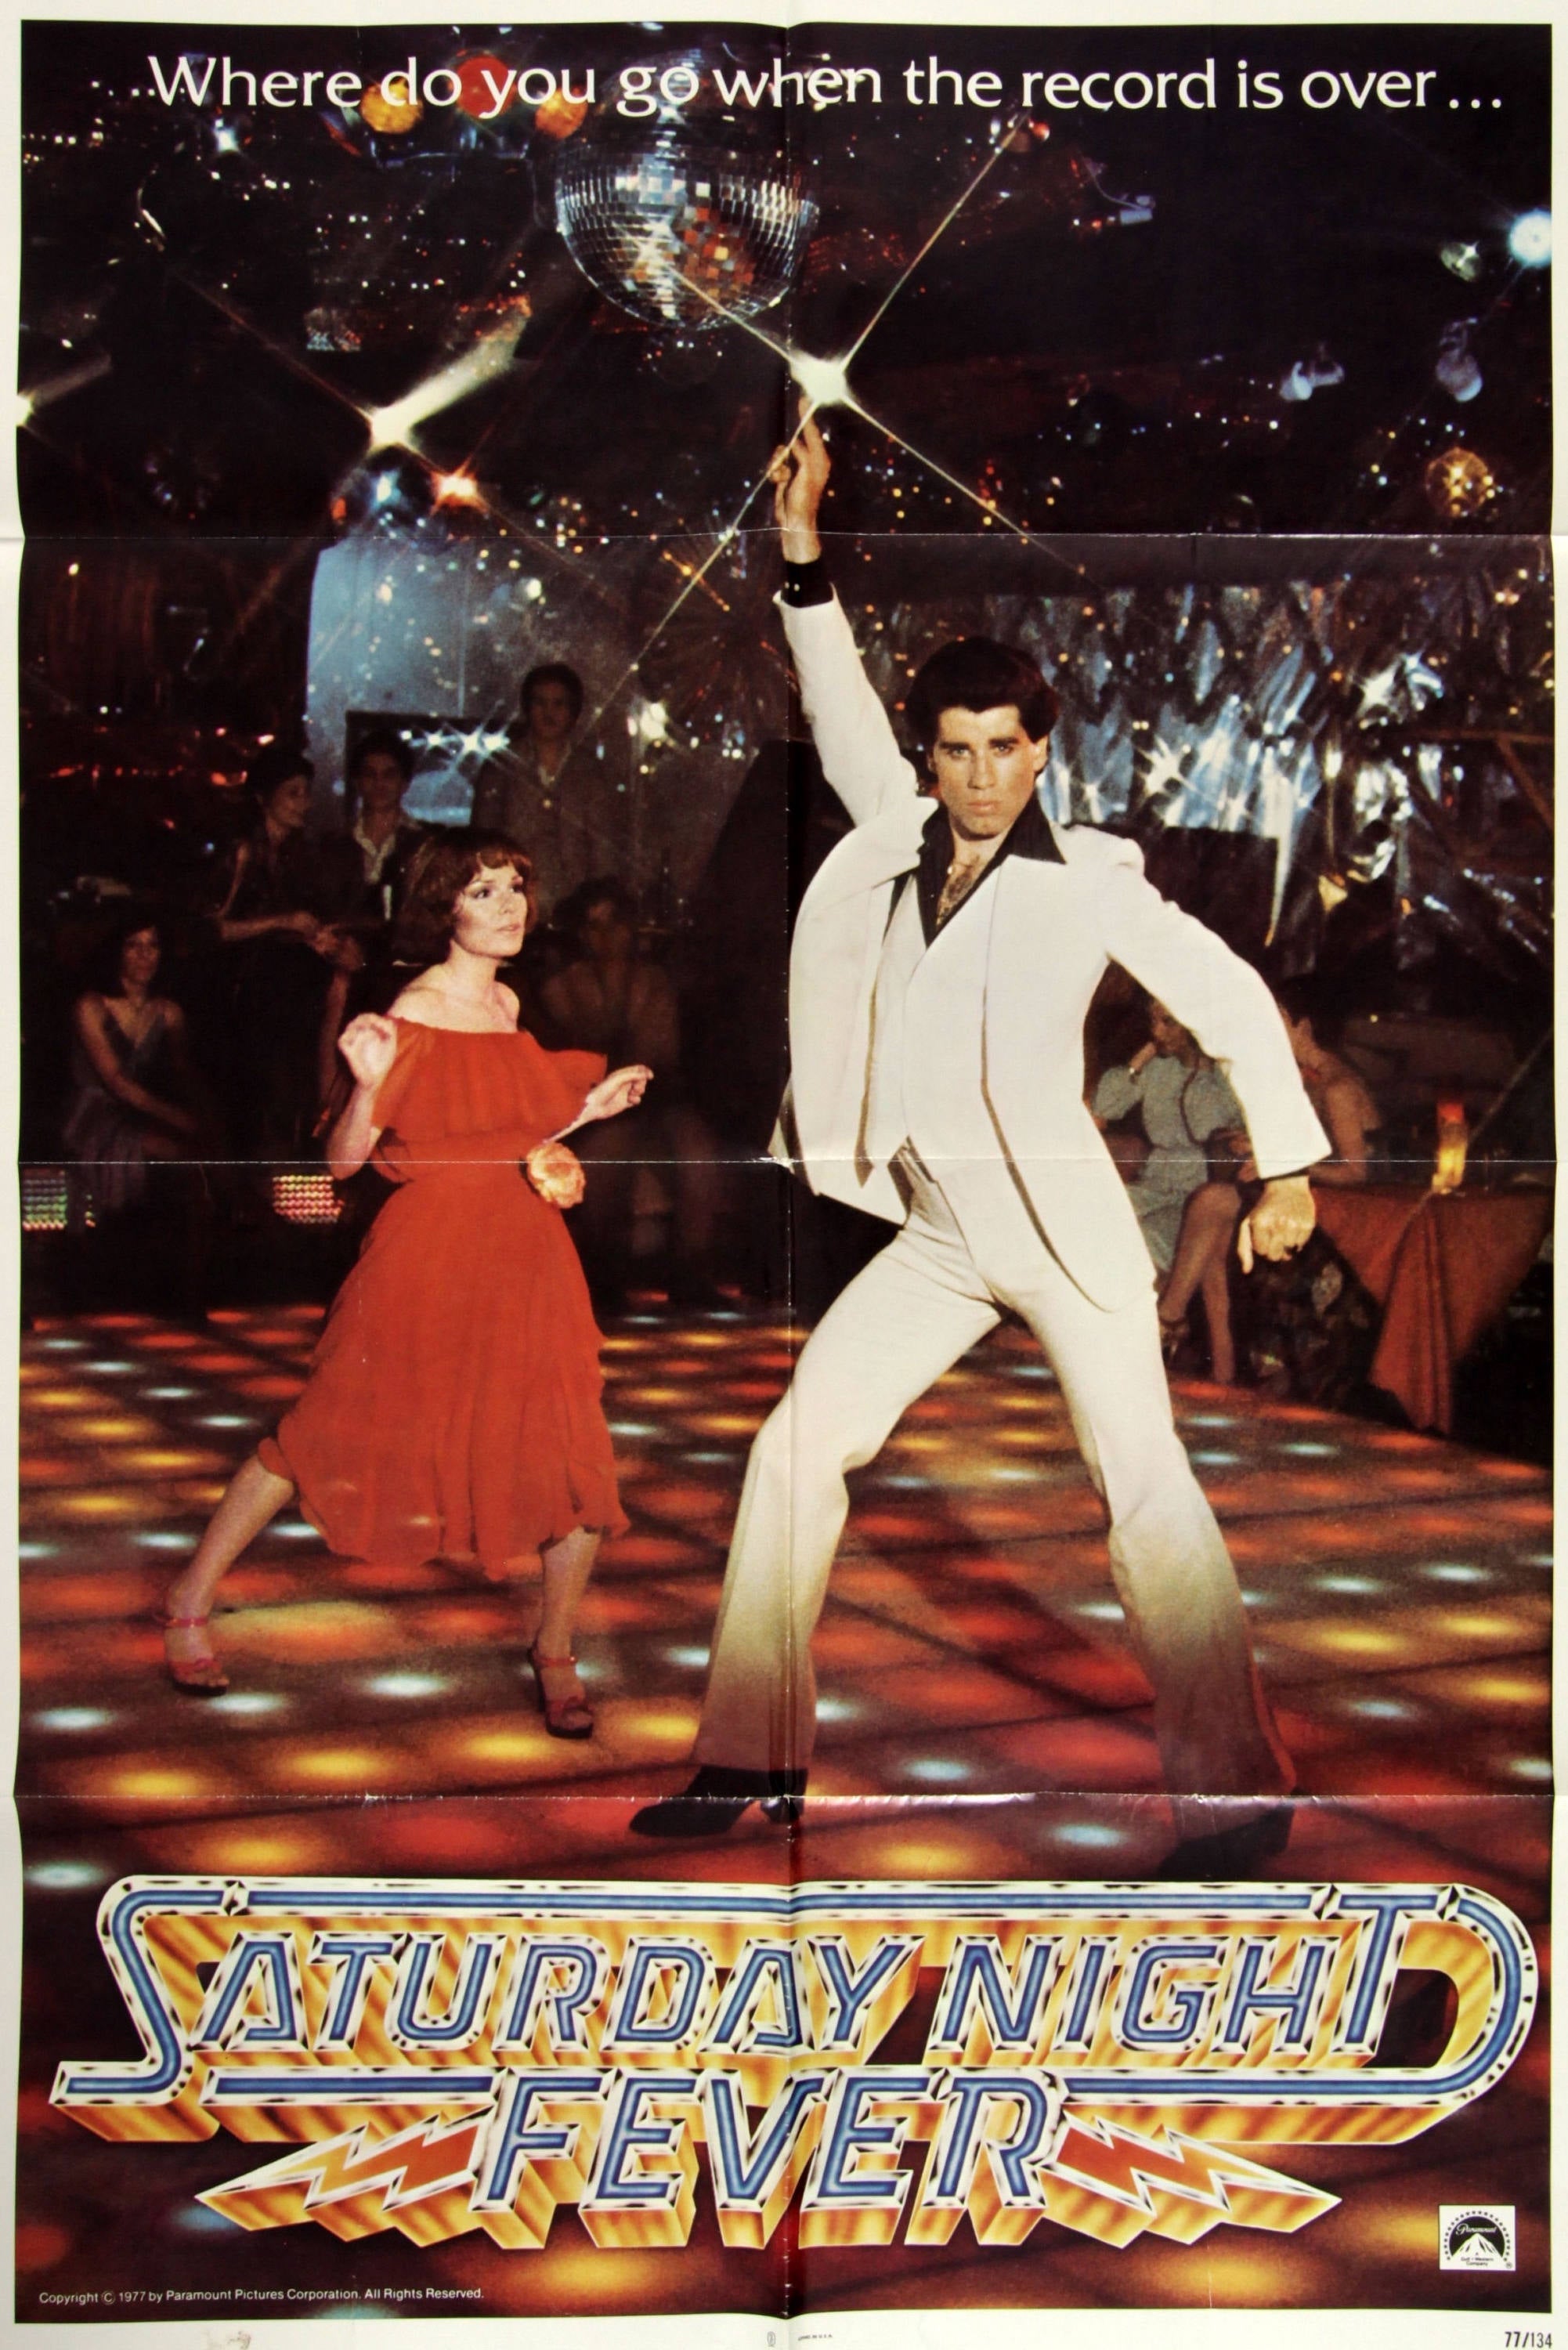 Vintage Music Art Poster - Saturday Night Fever - 0587